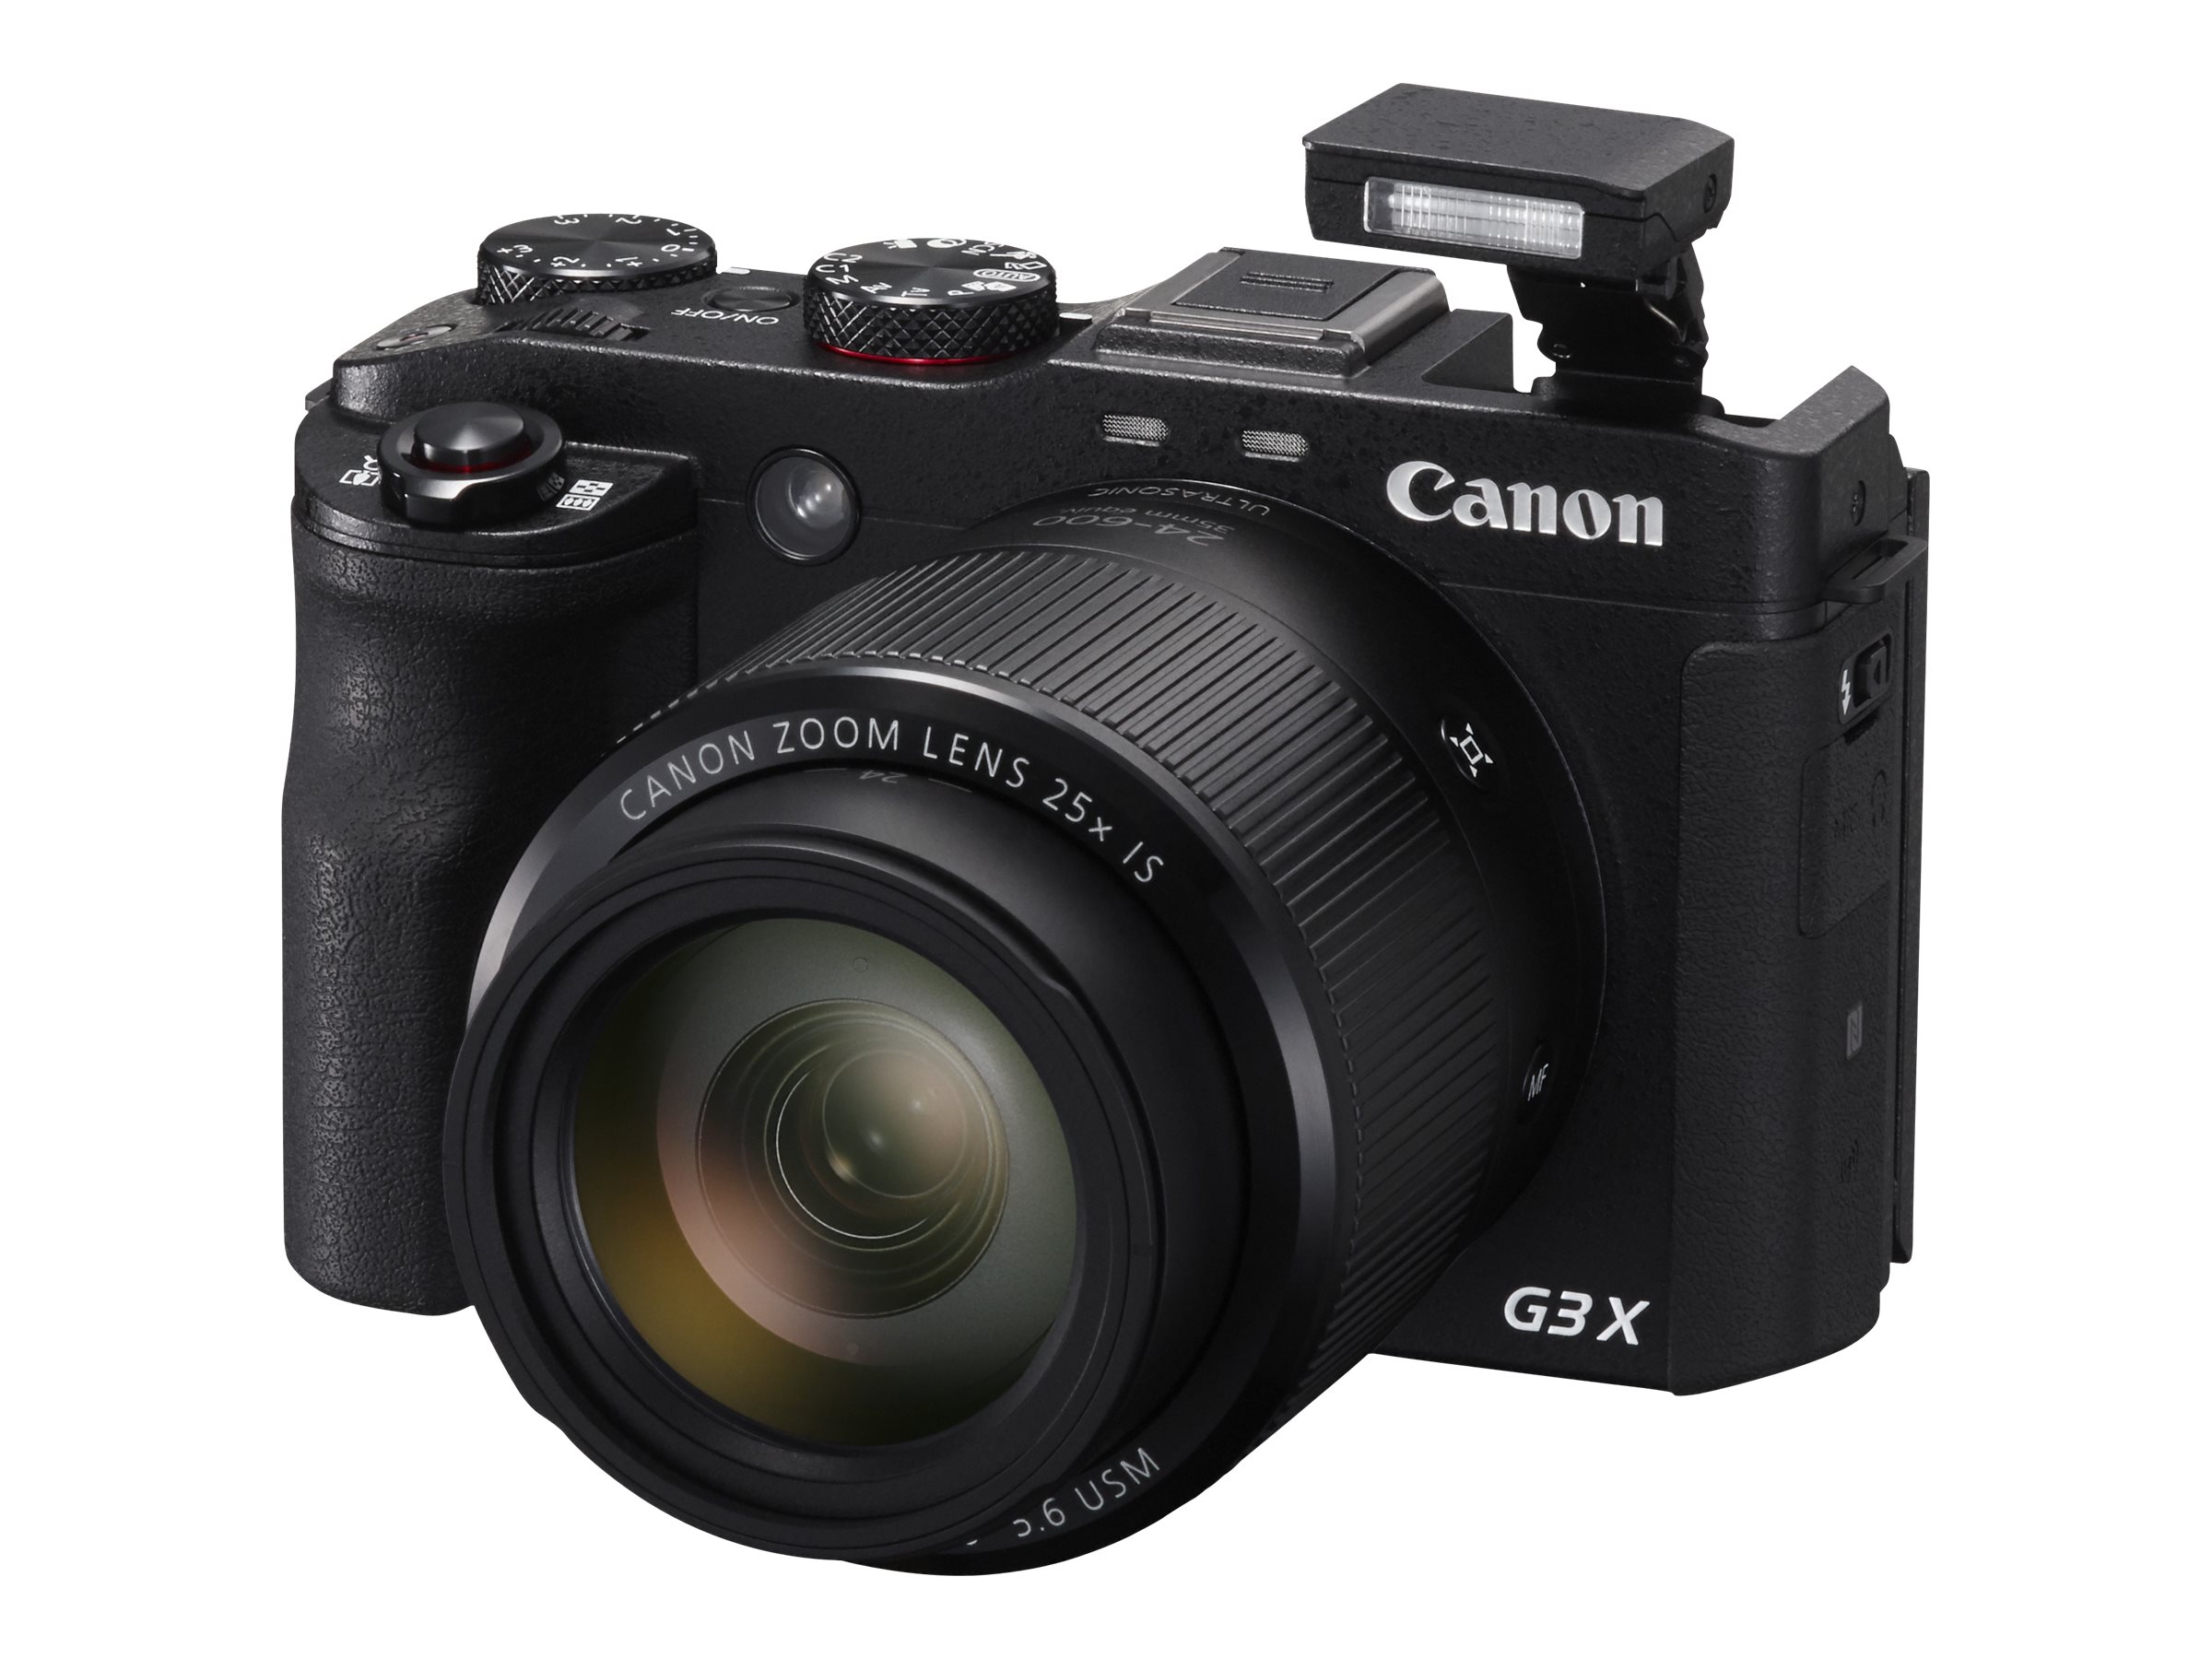 Canon PowerShot G3 X - Digital camera - compact - 20.2 MP - 1080p - 25x optical zoom - Wi-Fi, NFC - image 3 of 15